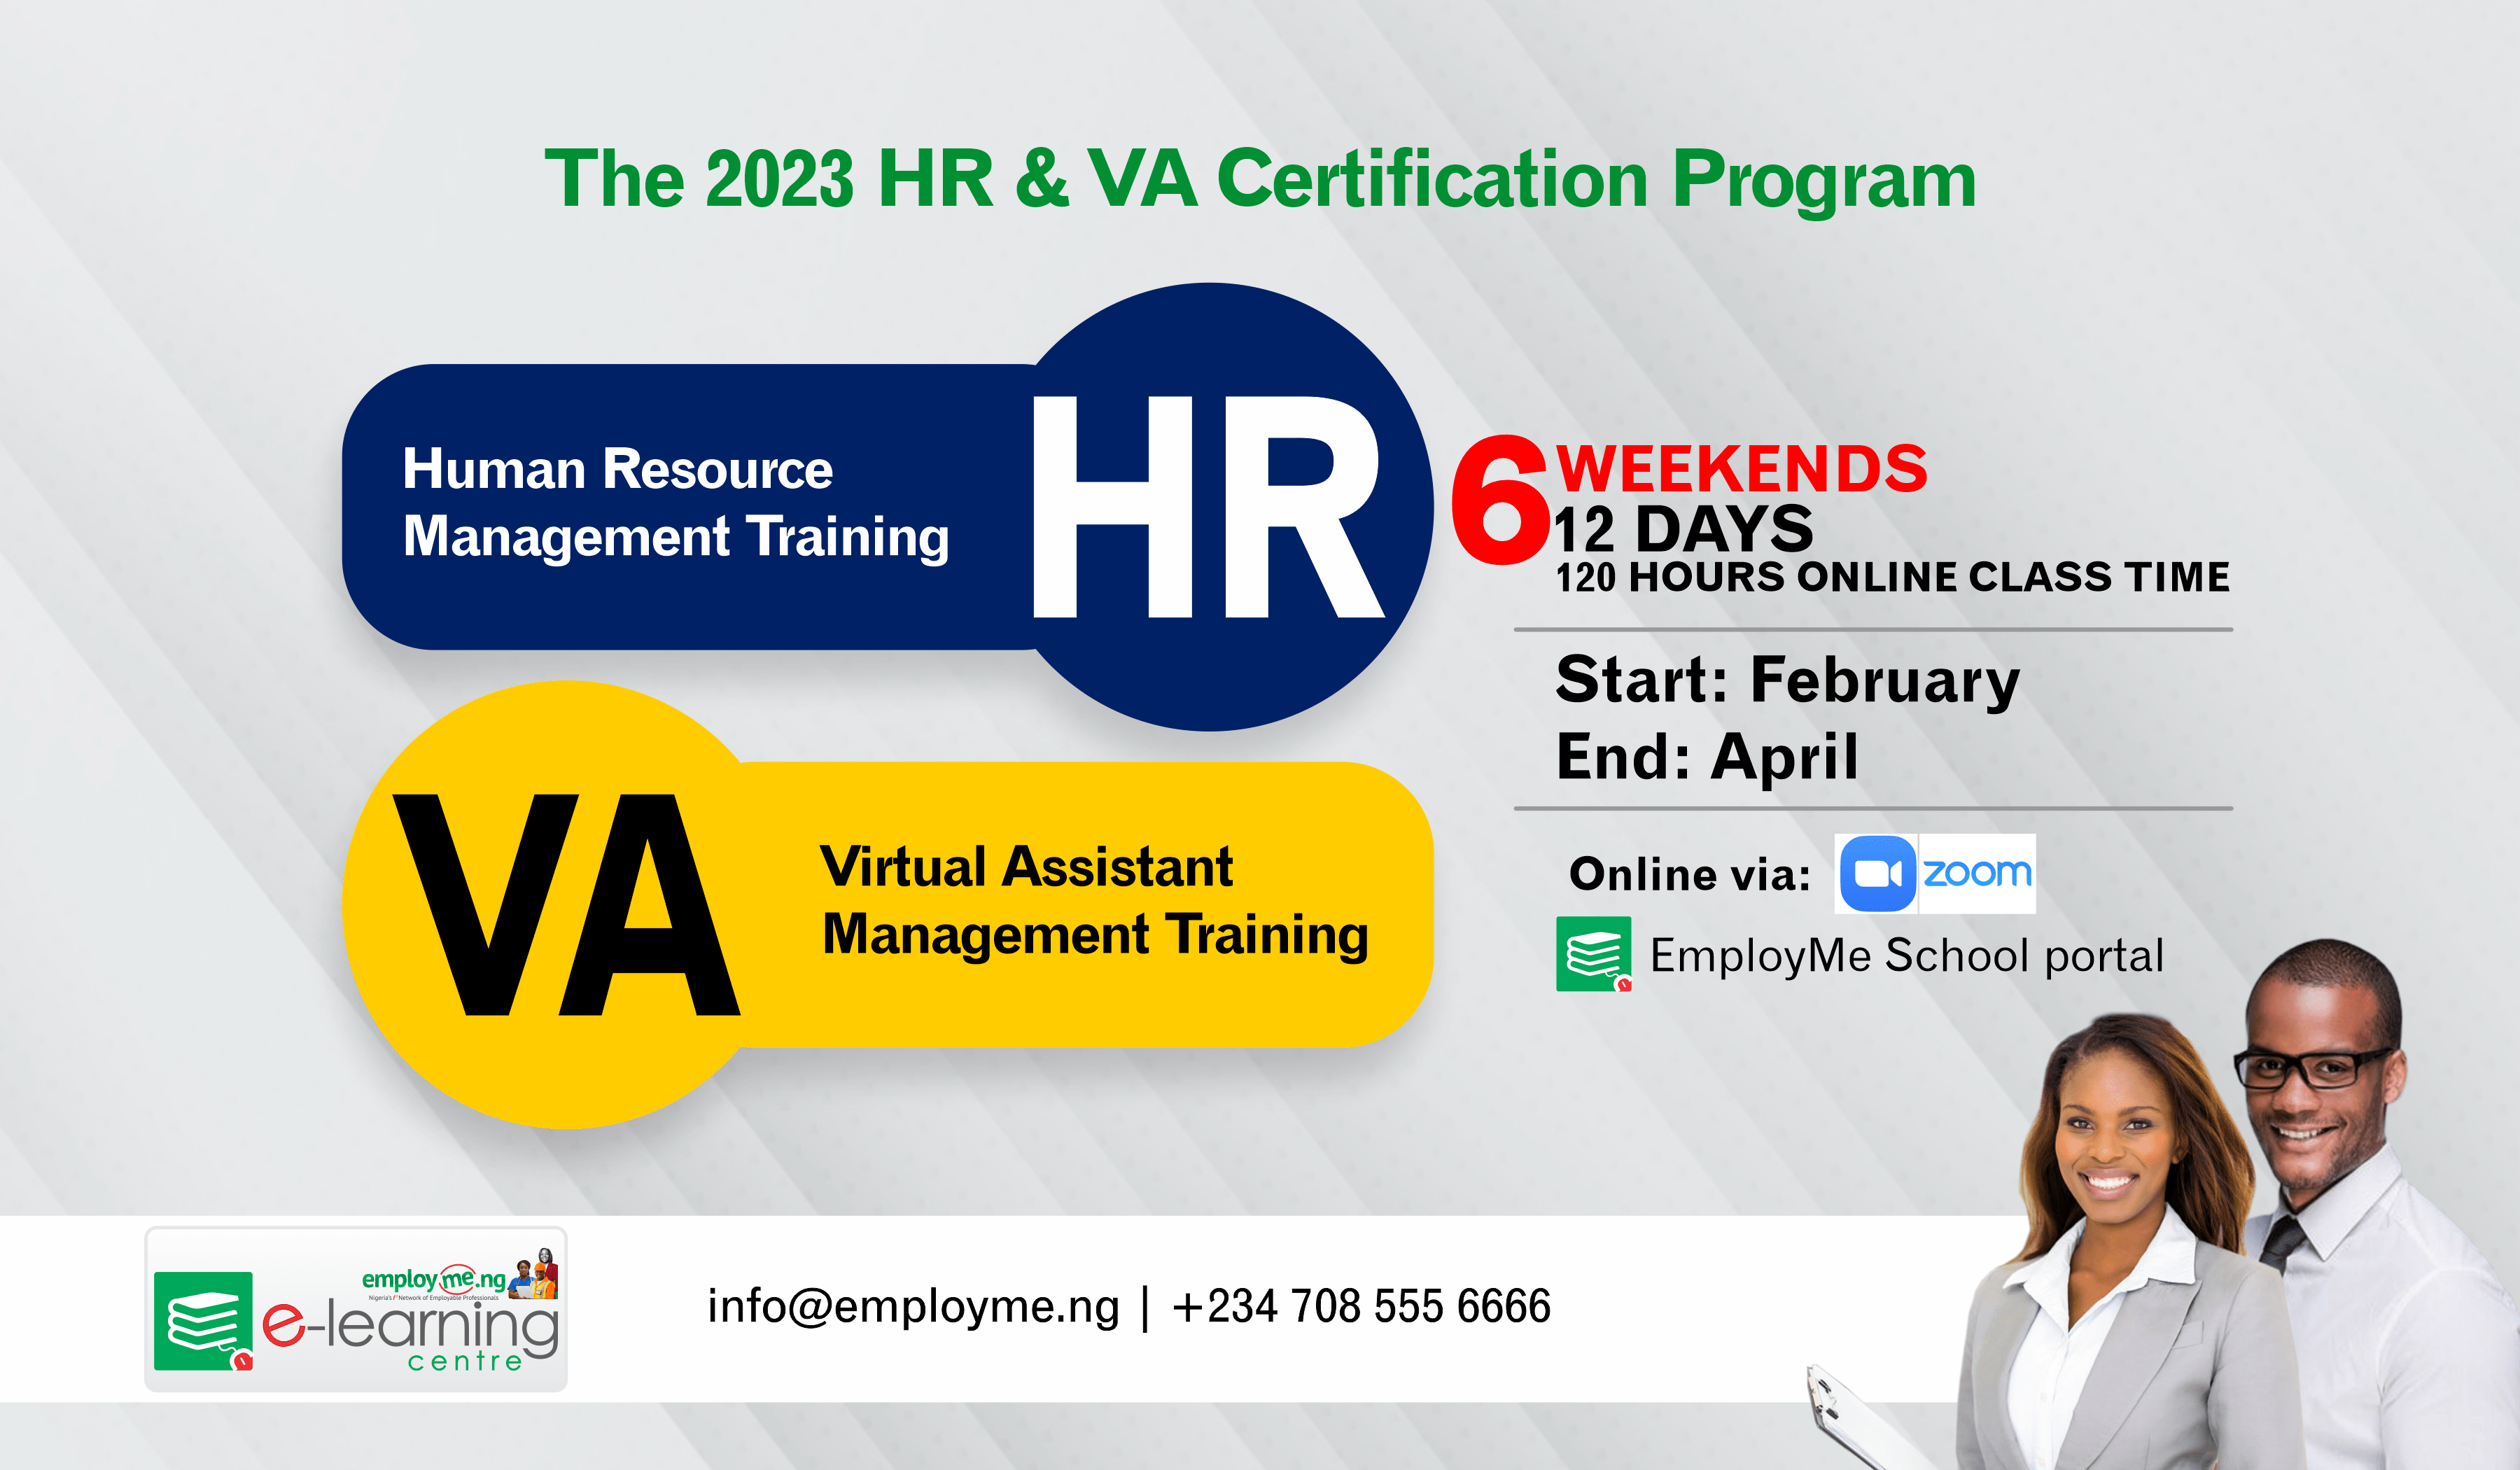 The 2023 HR & VA Training Certification program eLEarning